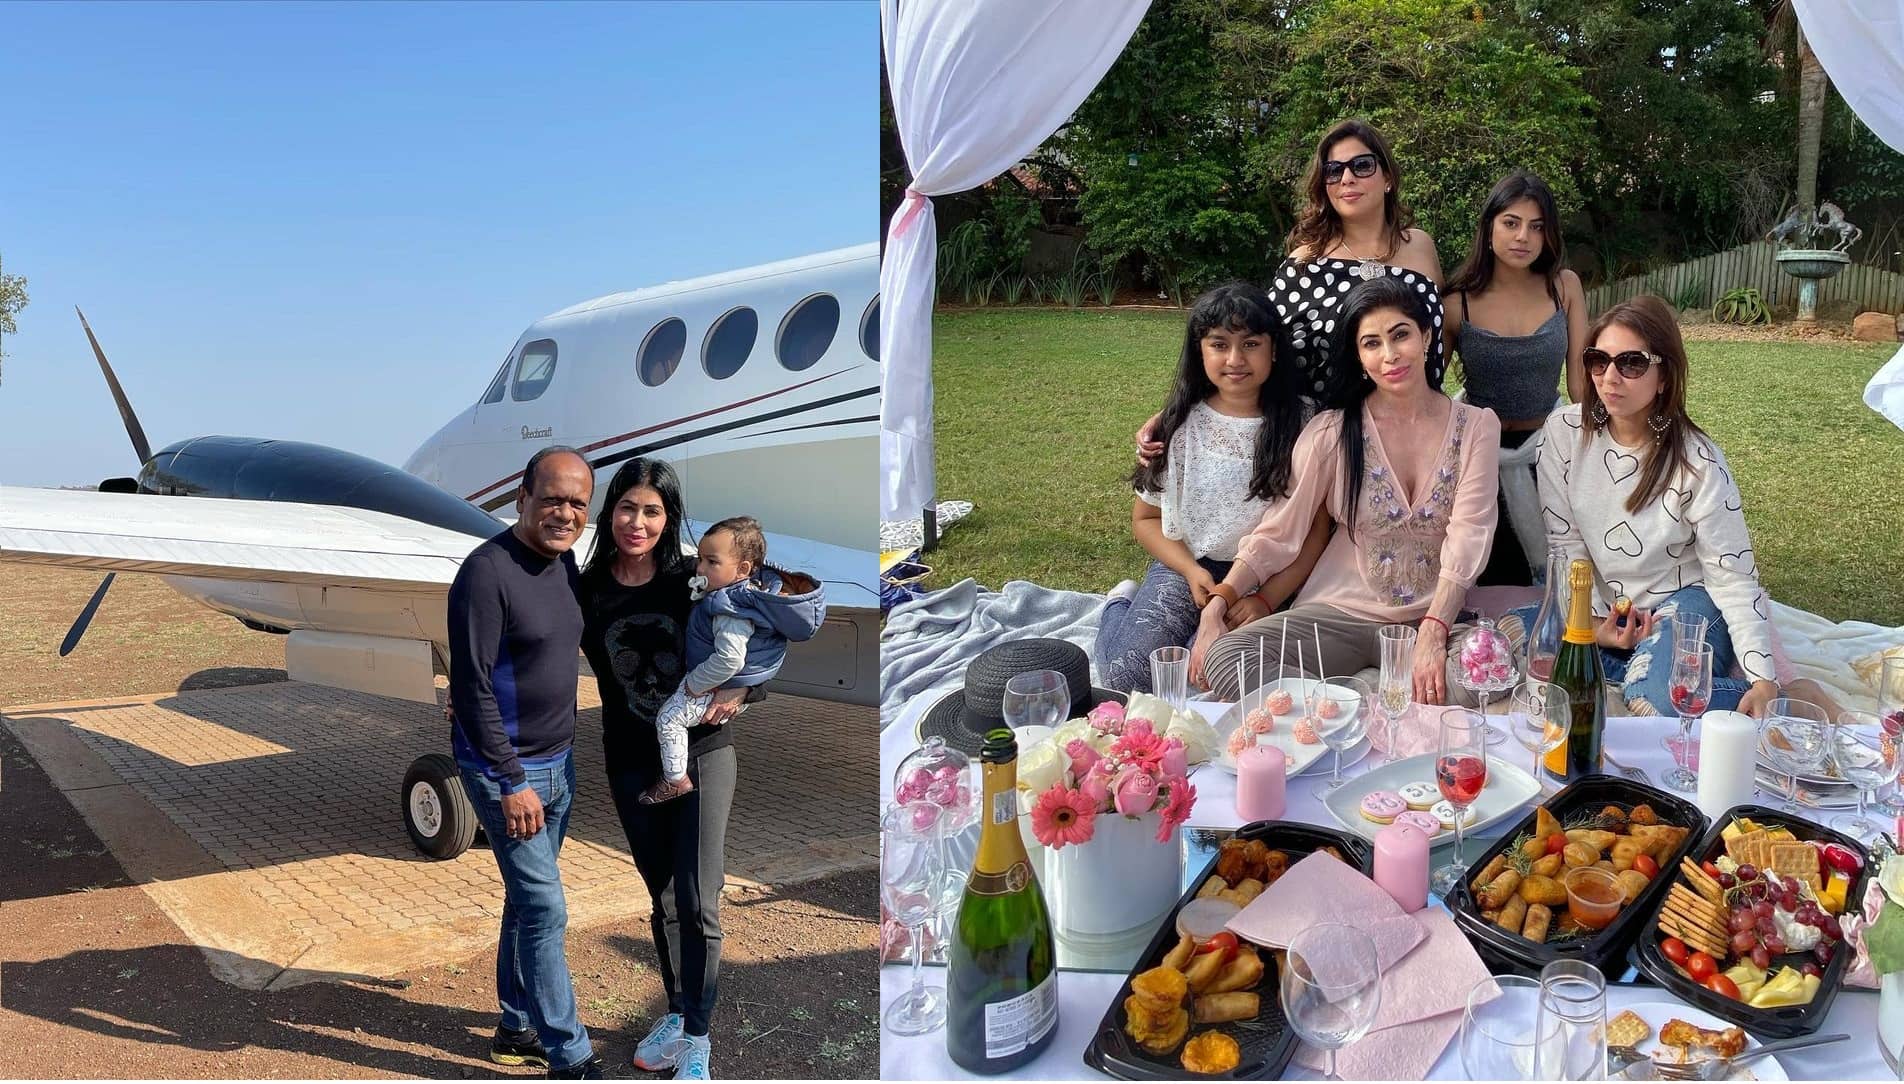 Sorisha Naidoo from The Real Housewives of Durban living a luxury lifestyle. Credit: Sorisha Naidoo/Instagram